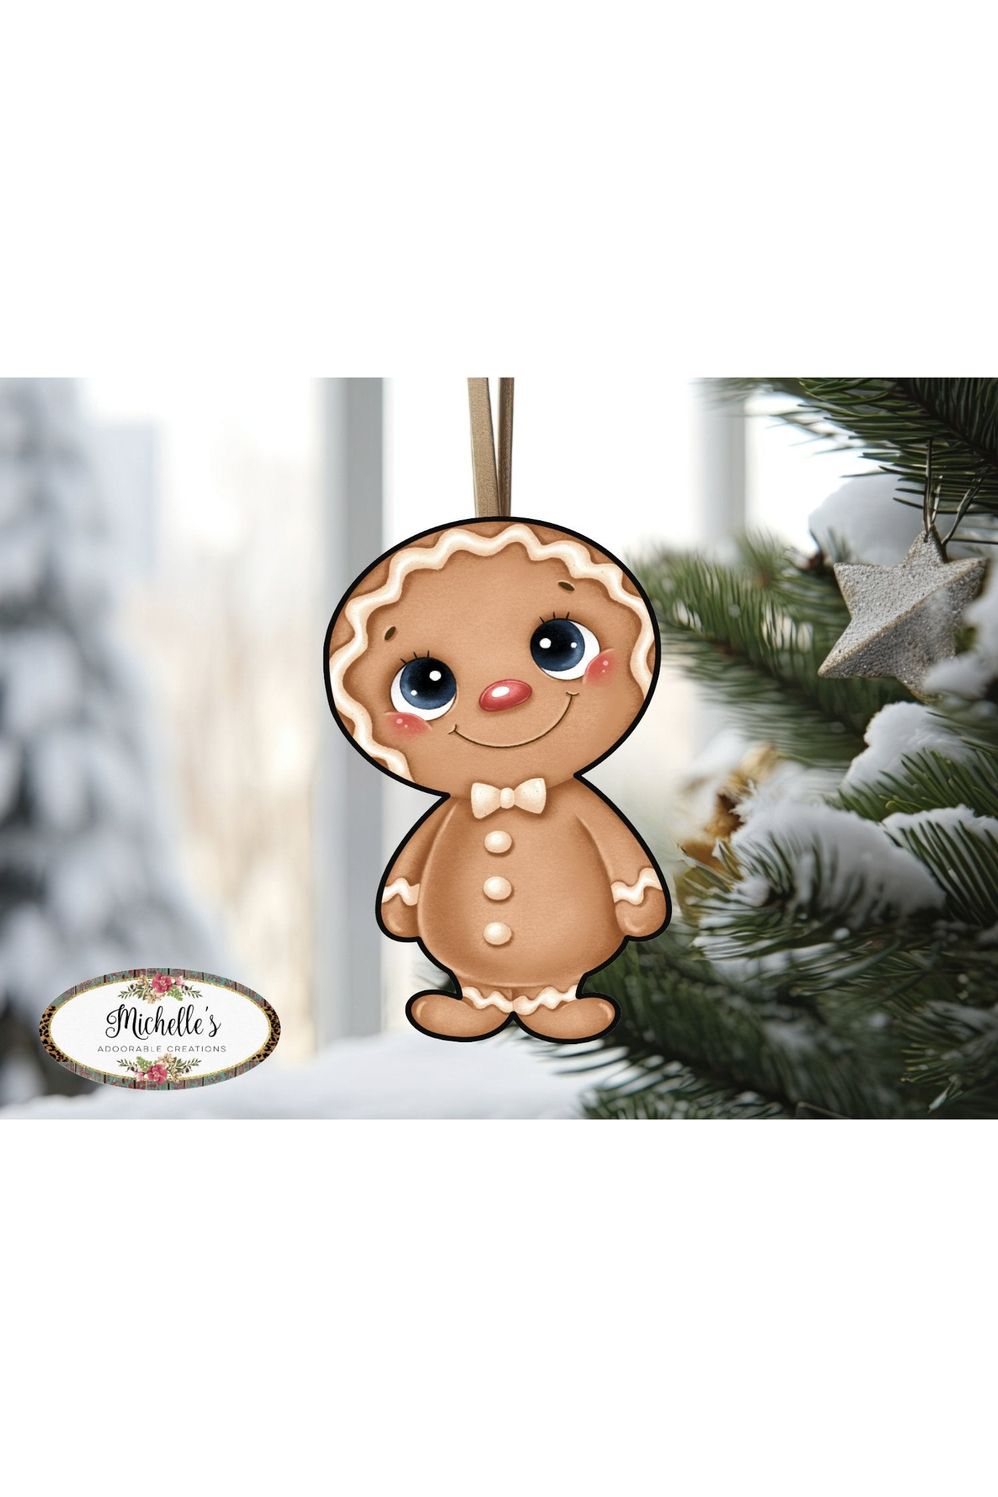 Shop For Gingerbread Boy Sweet Shoppe Sign GBB1- Wreath Enhancement